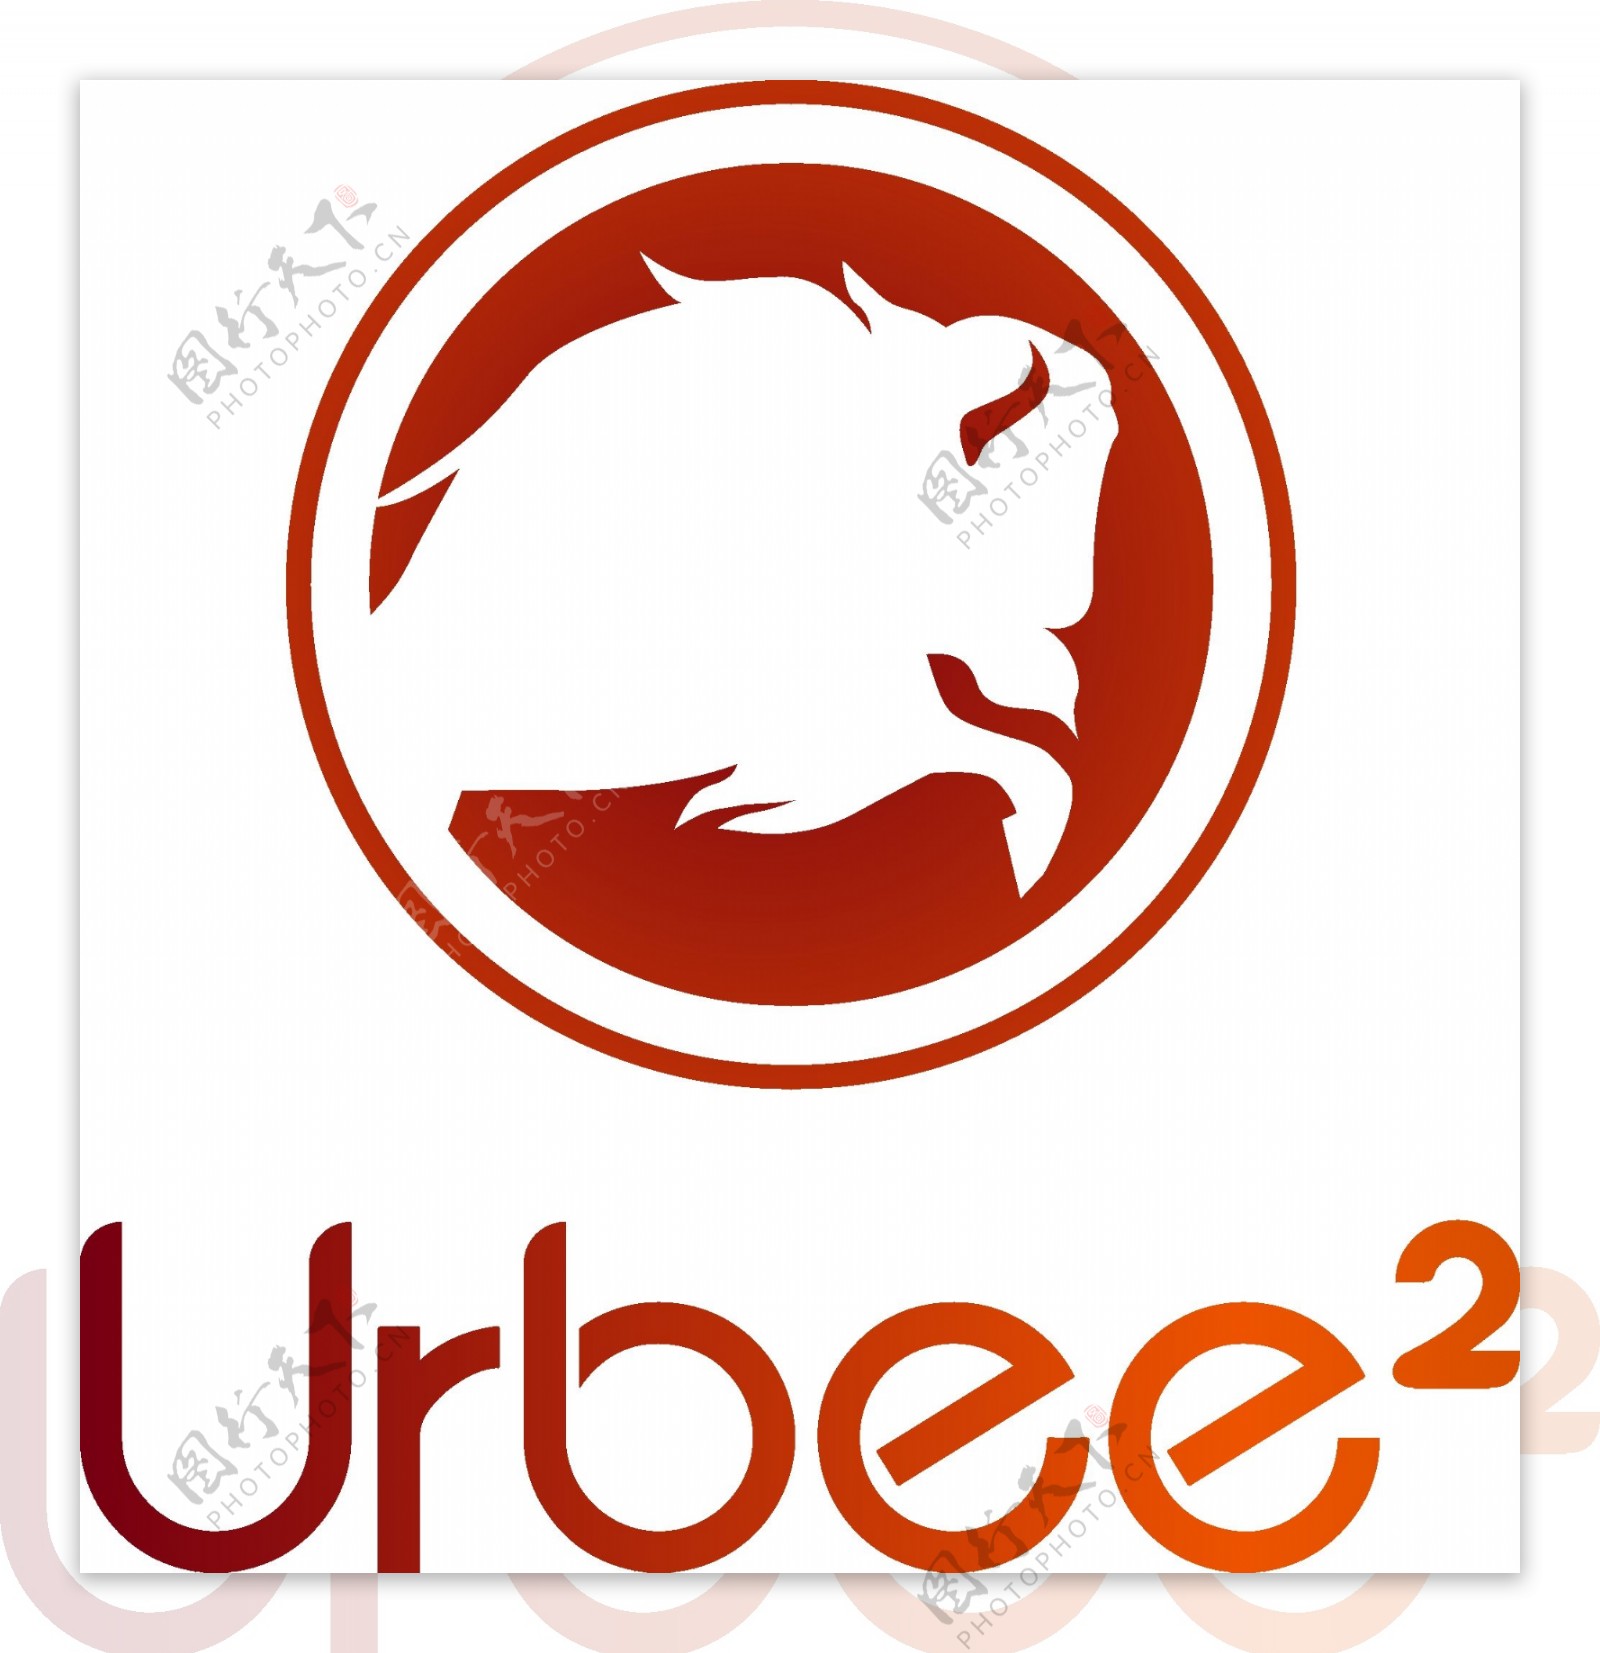 2urbee徽章设计挑战野牛